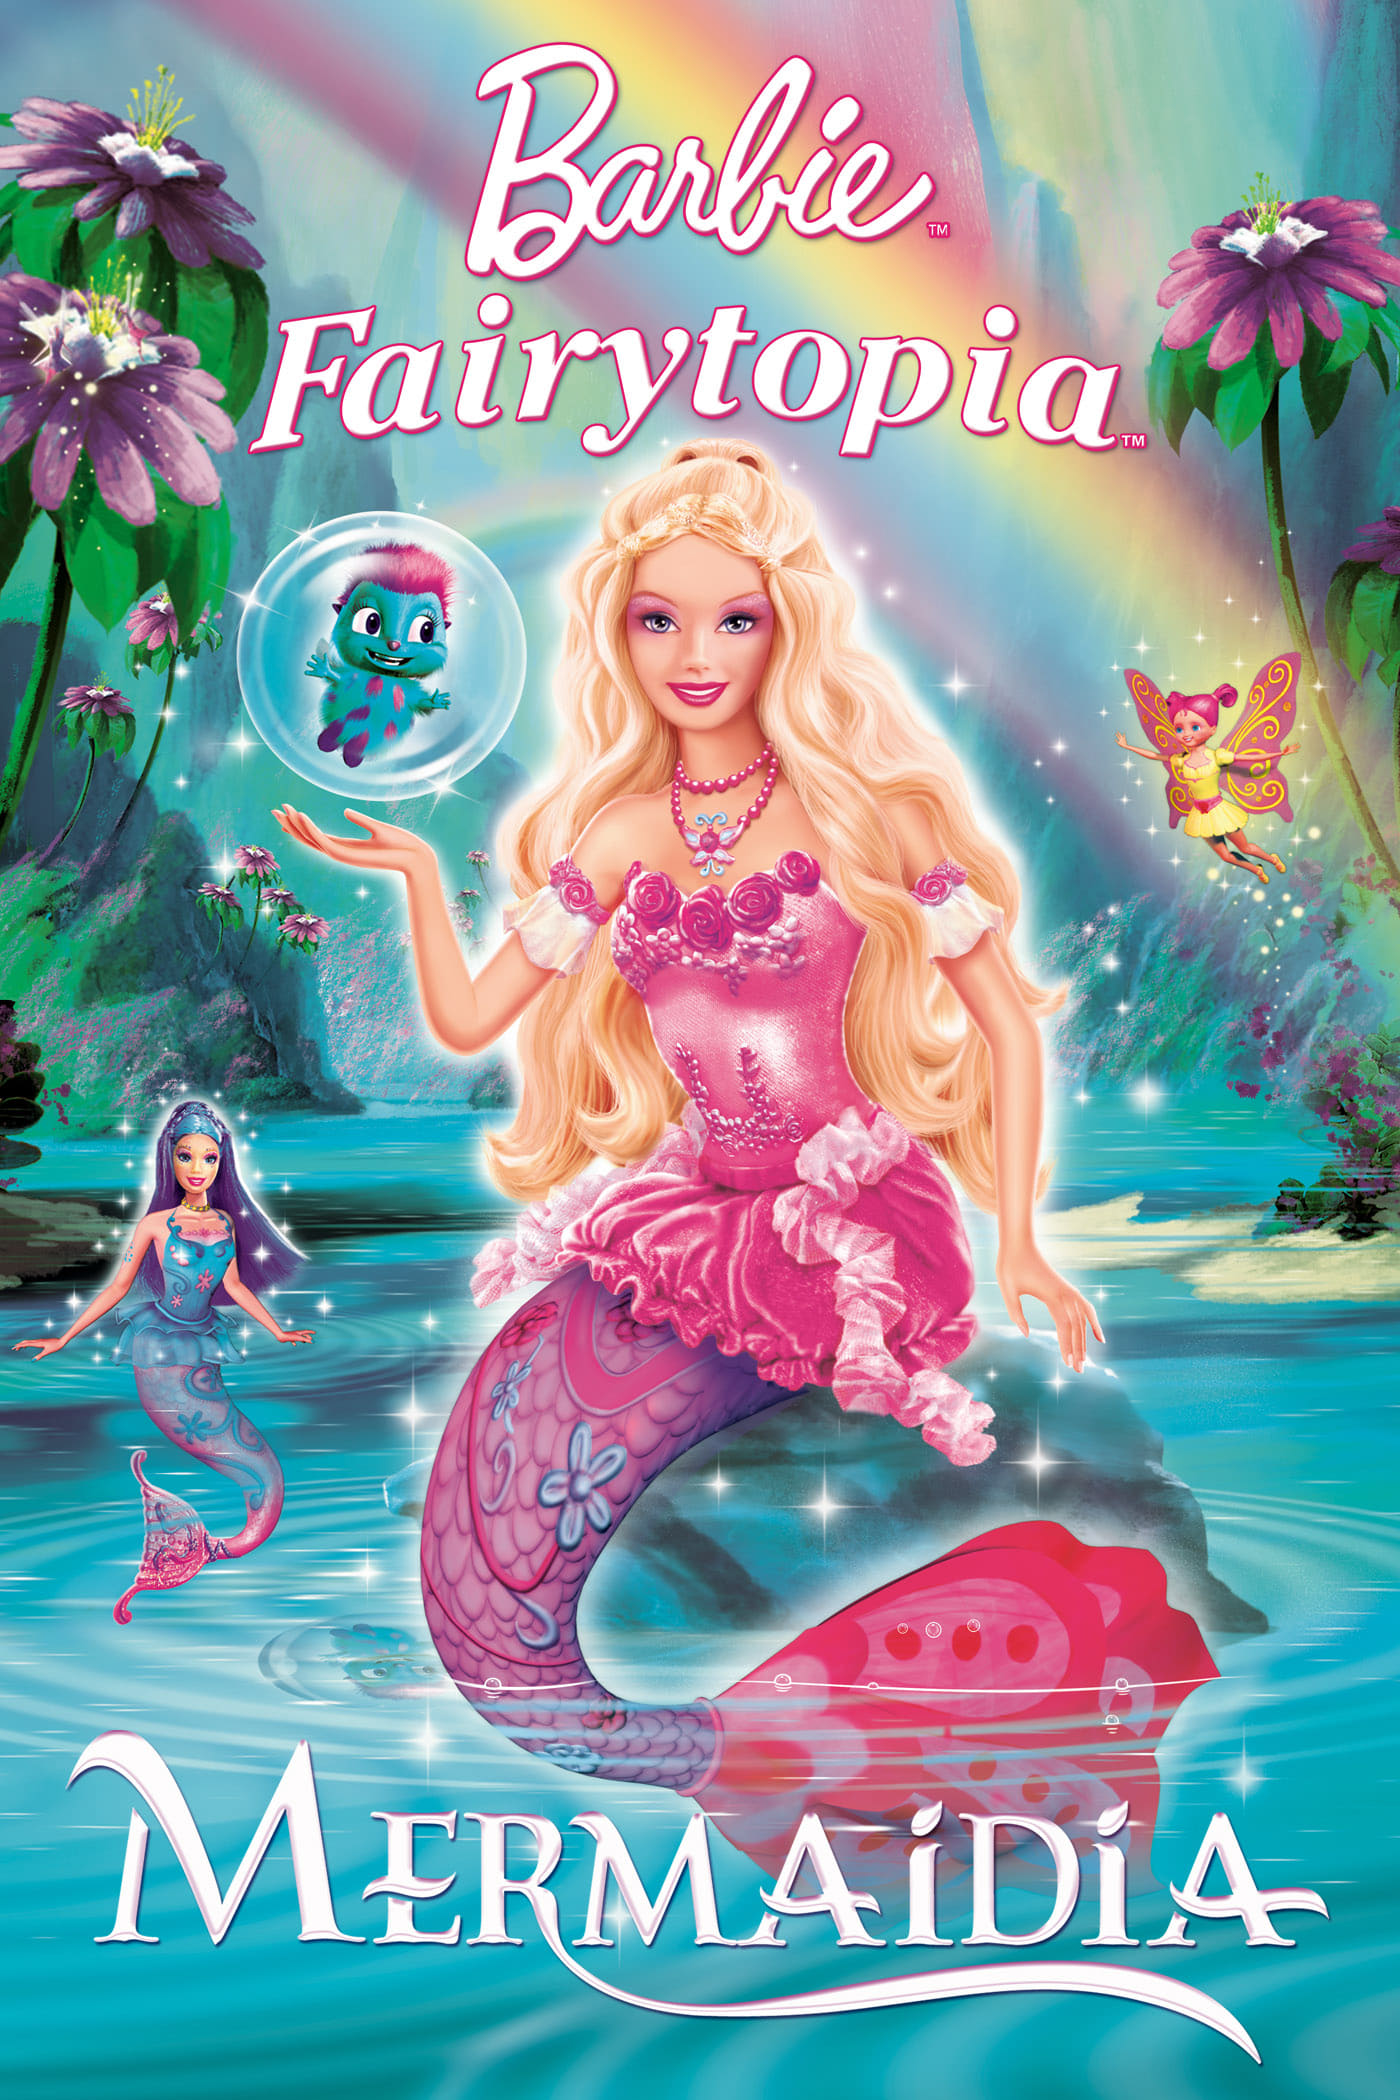 Chuyện Thần Tiên Barbie: Xứ Sở Mermaidia - Barbie Fairytopia: Mermaidia (2006)